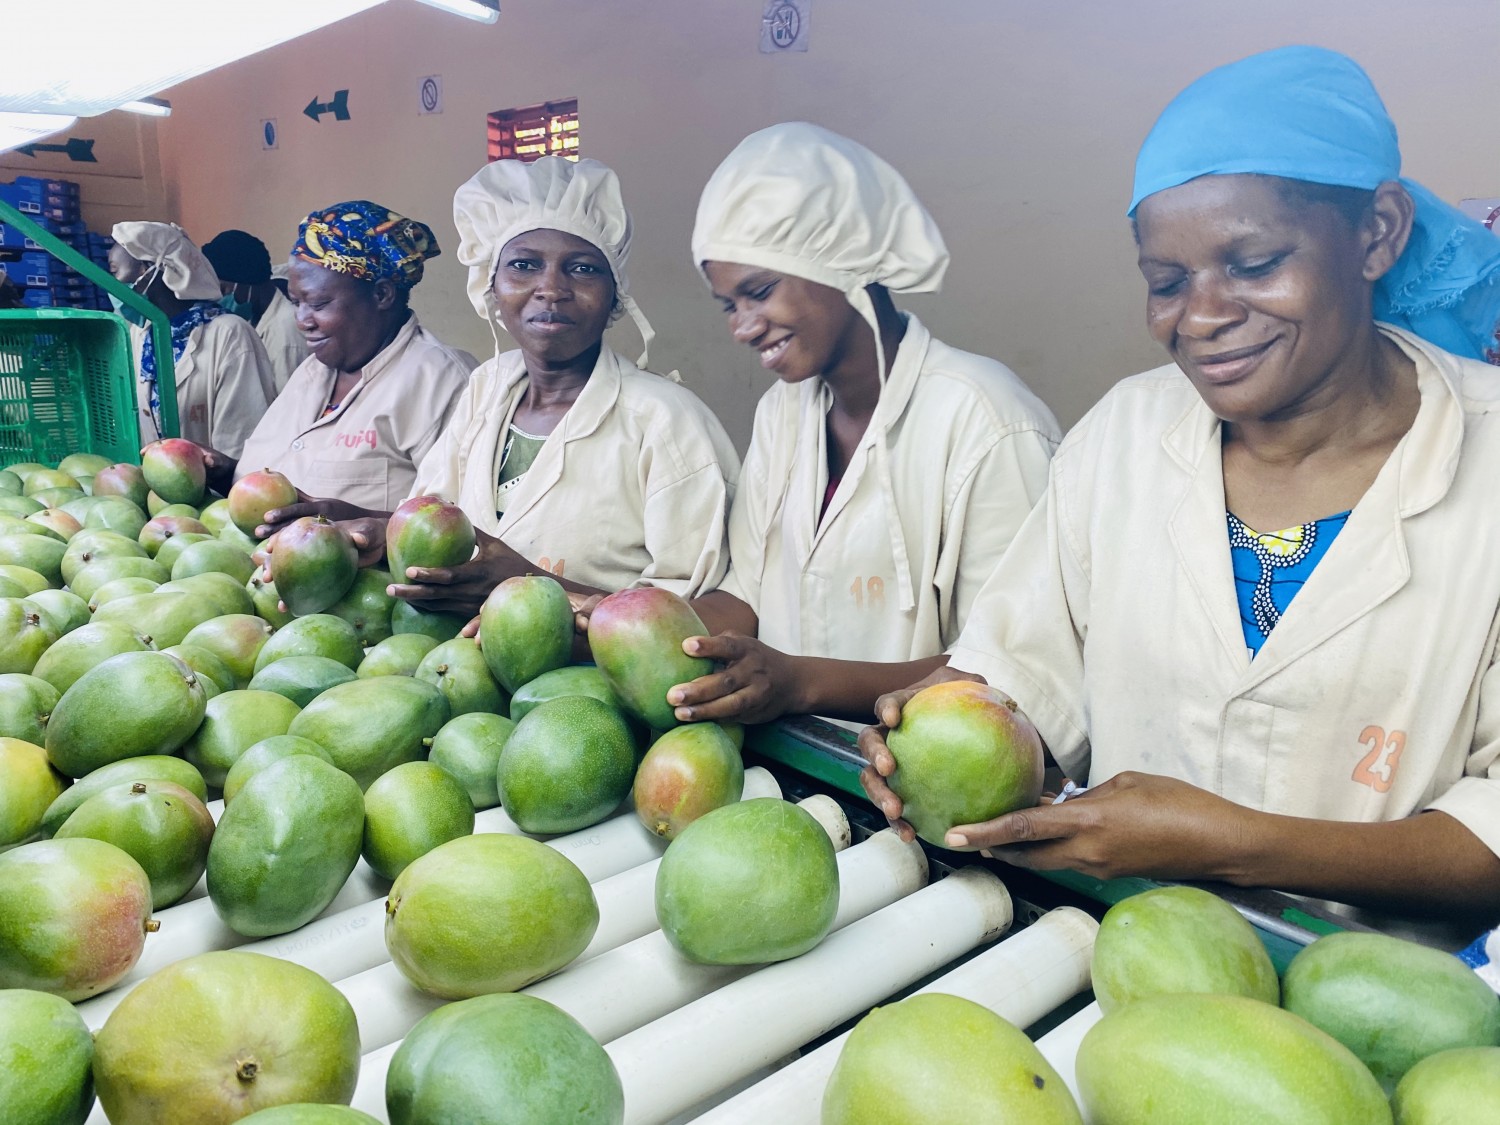 Eosta Fruiteq mango workers